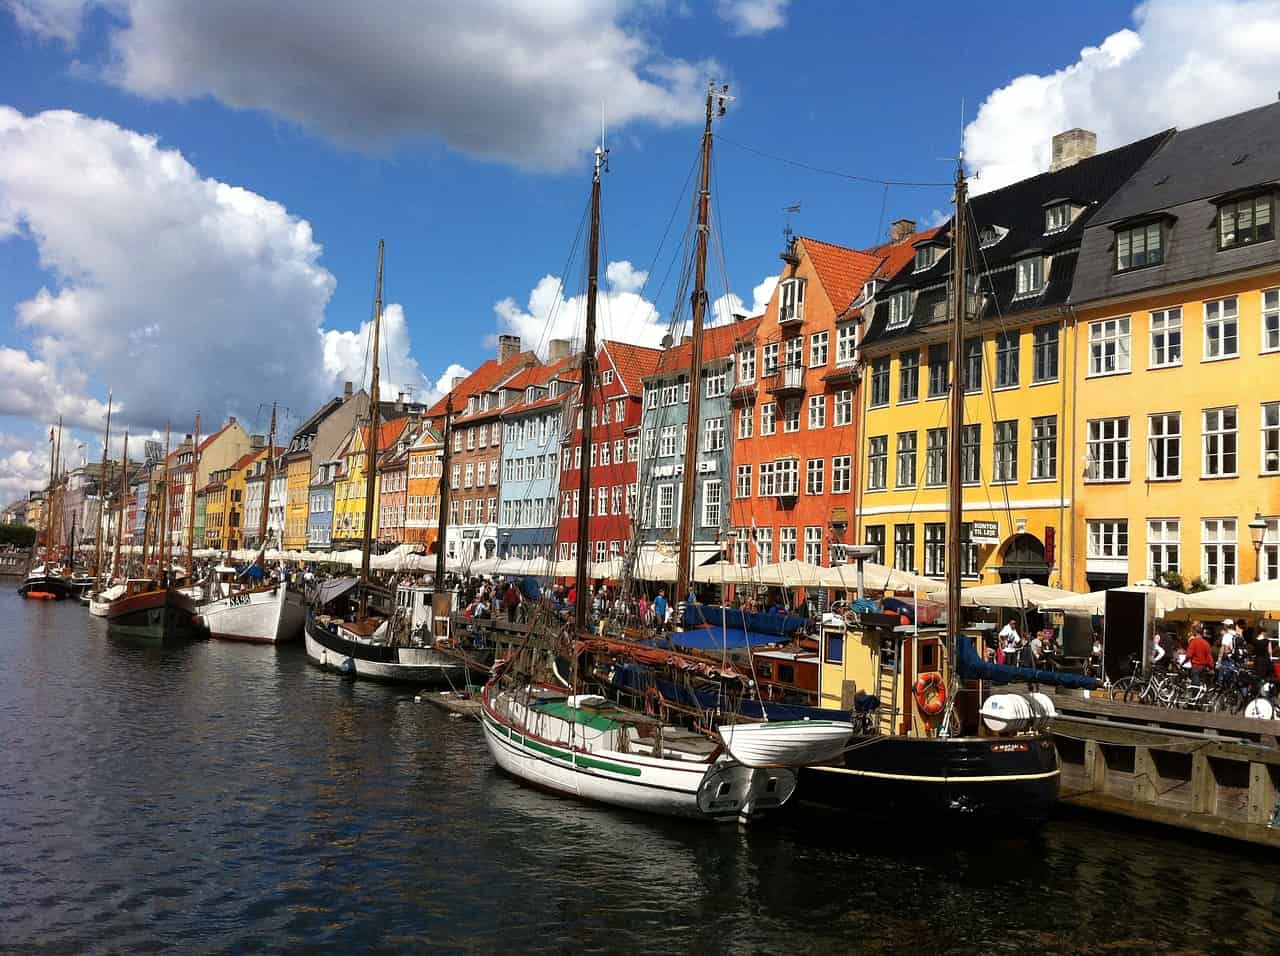 Boats on the waterways of Copenhagen